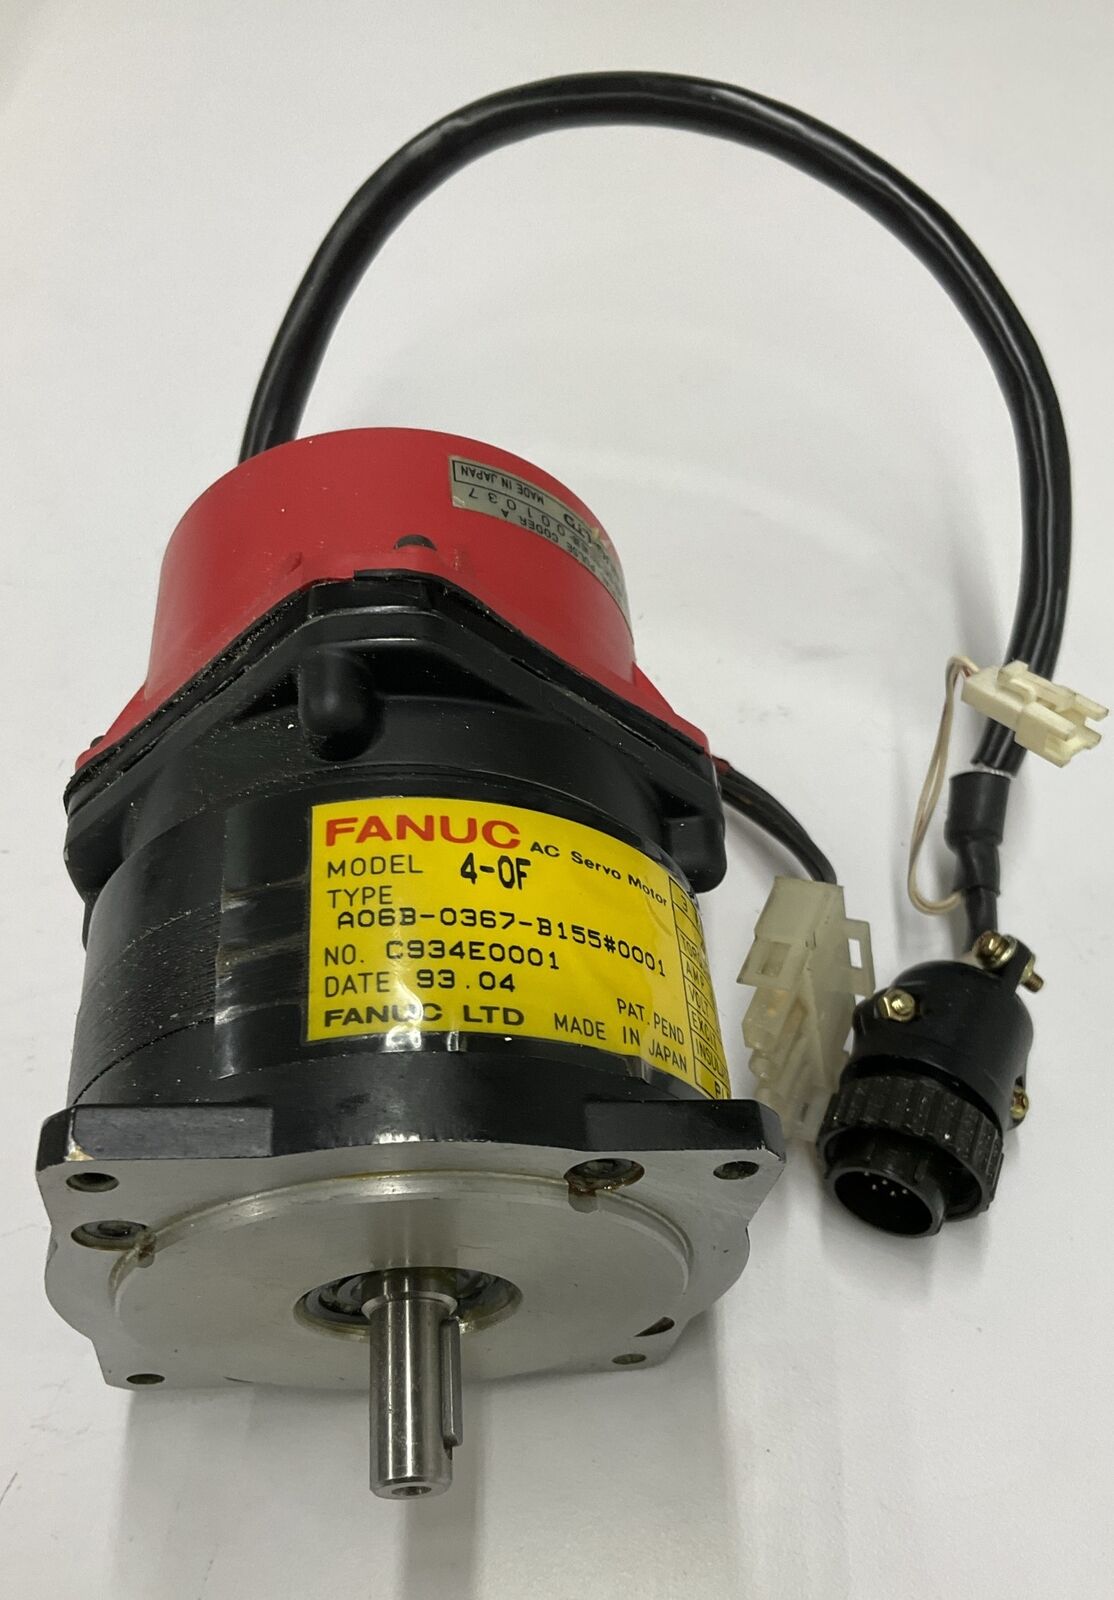 Fanuc A06B-0367-B155 #0001 SERVO MOTOR PULSE CODER A (BL109)